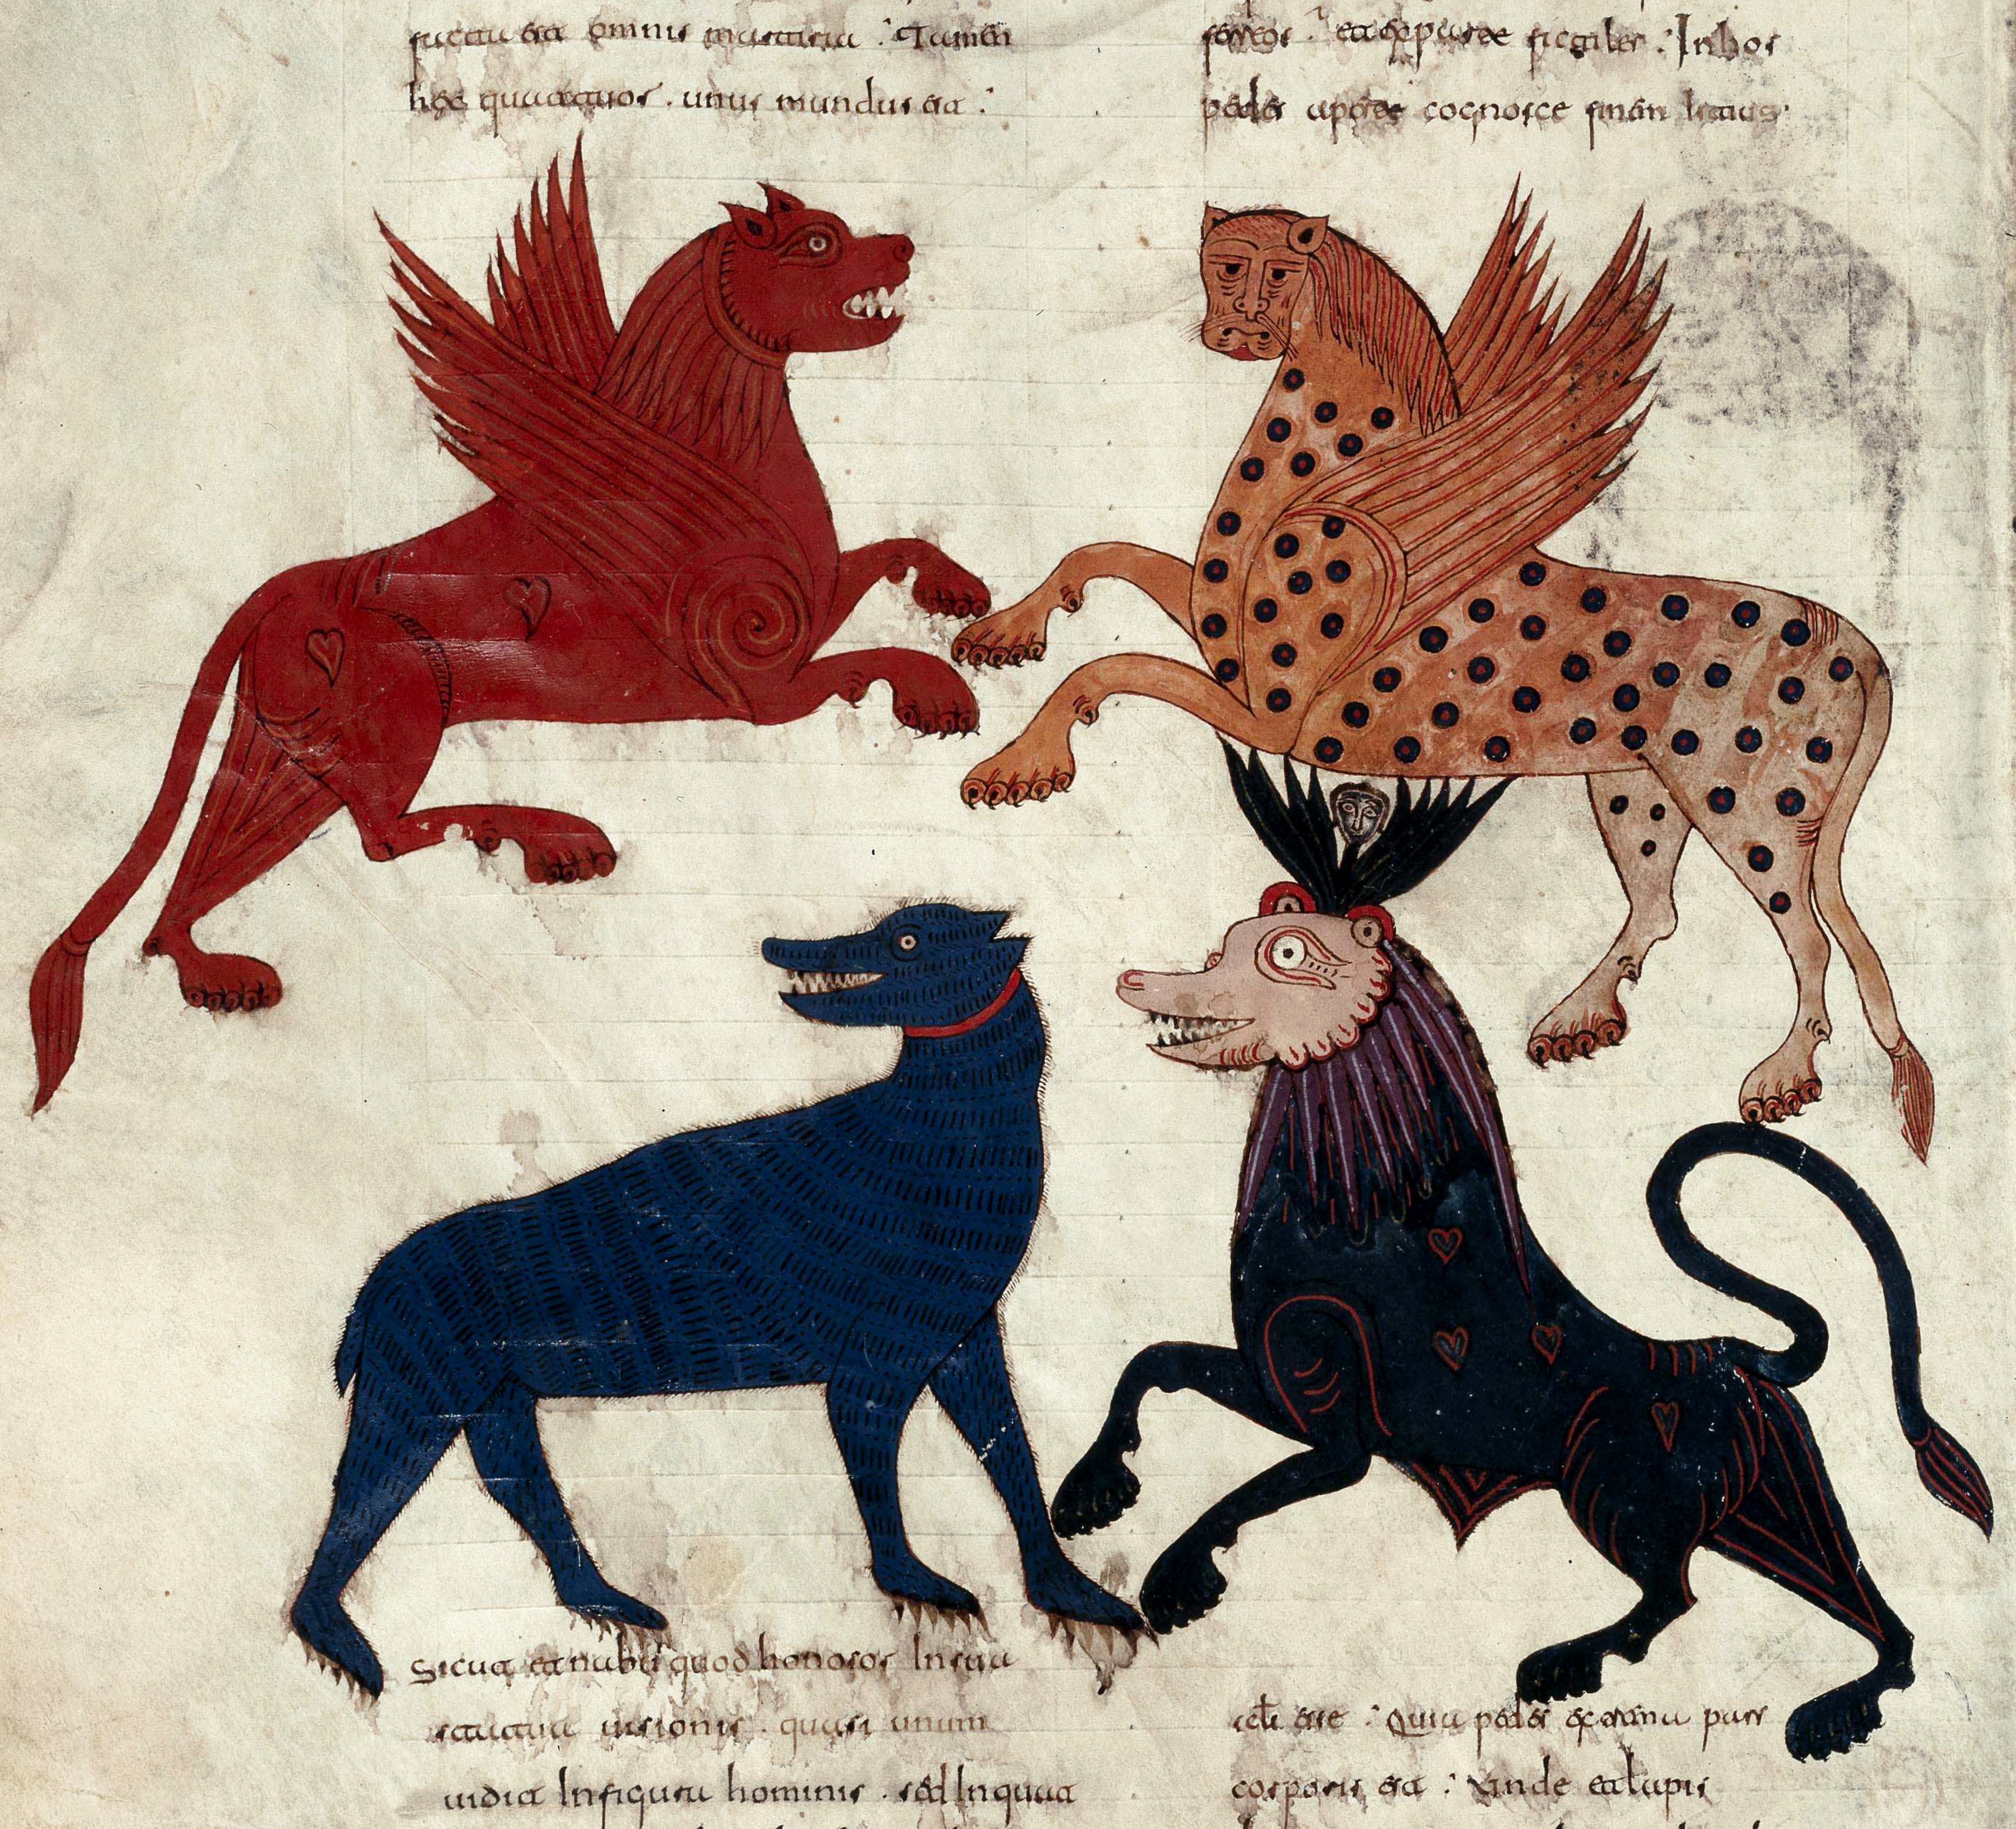 Beatus de Facundus, p. 141 – Les quatre bêtes de la vision de Daniel (Dn 7, 1-8).